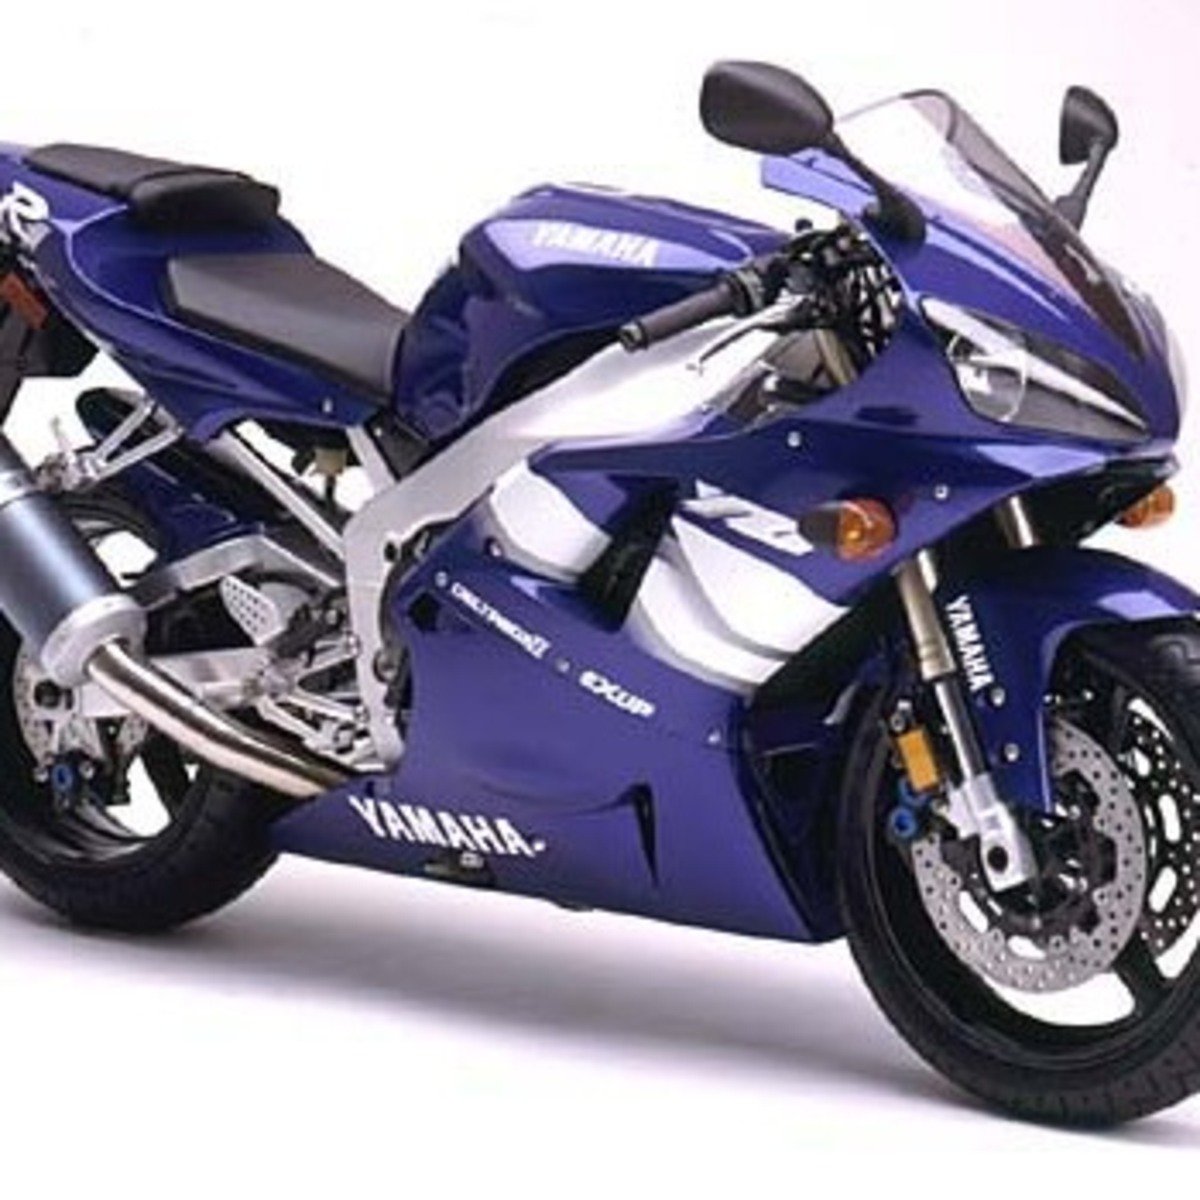 Yamaha YZF R1 (2000 - 01)